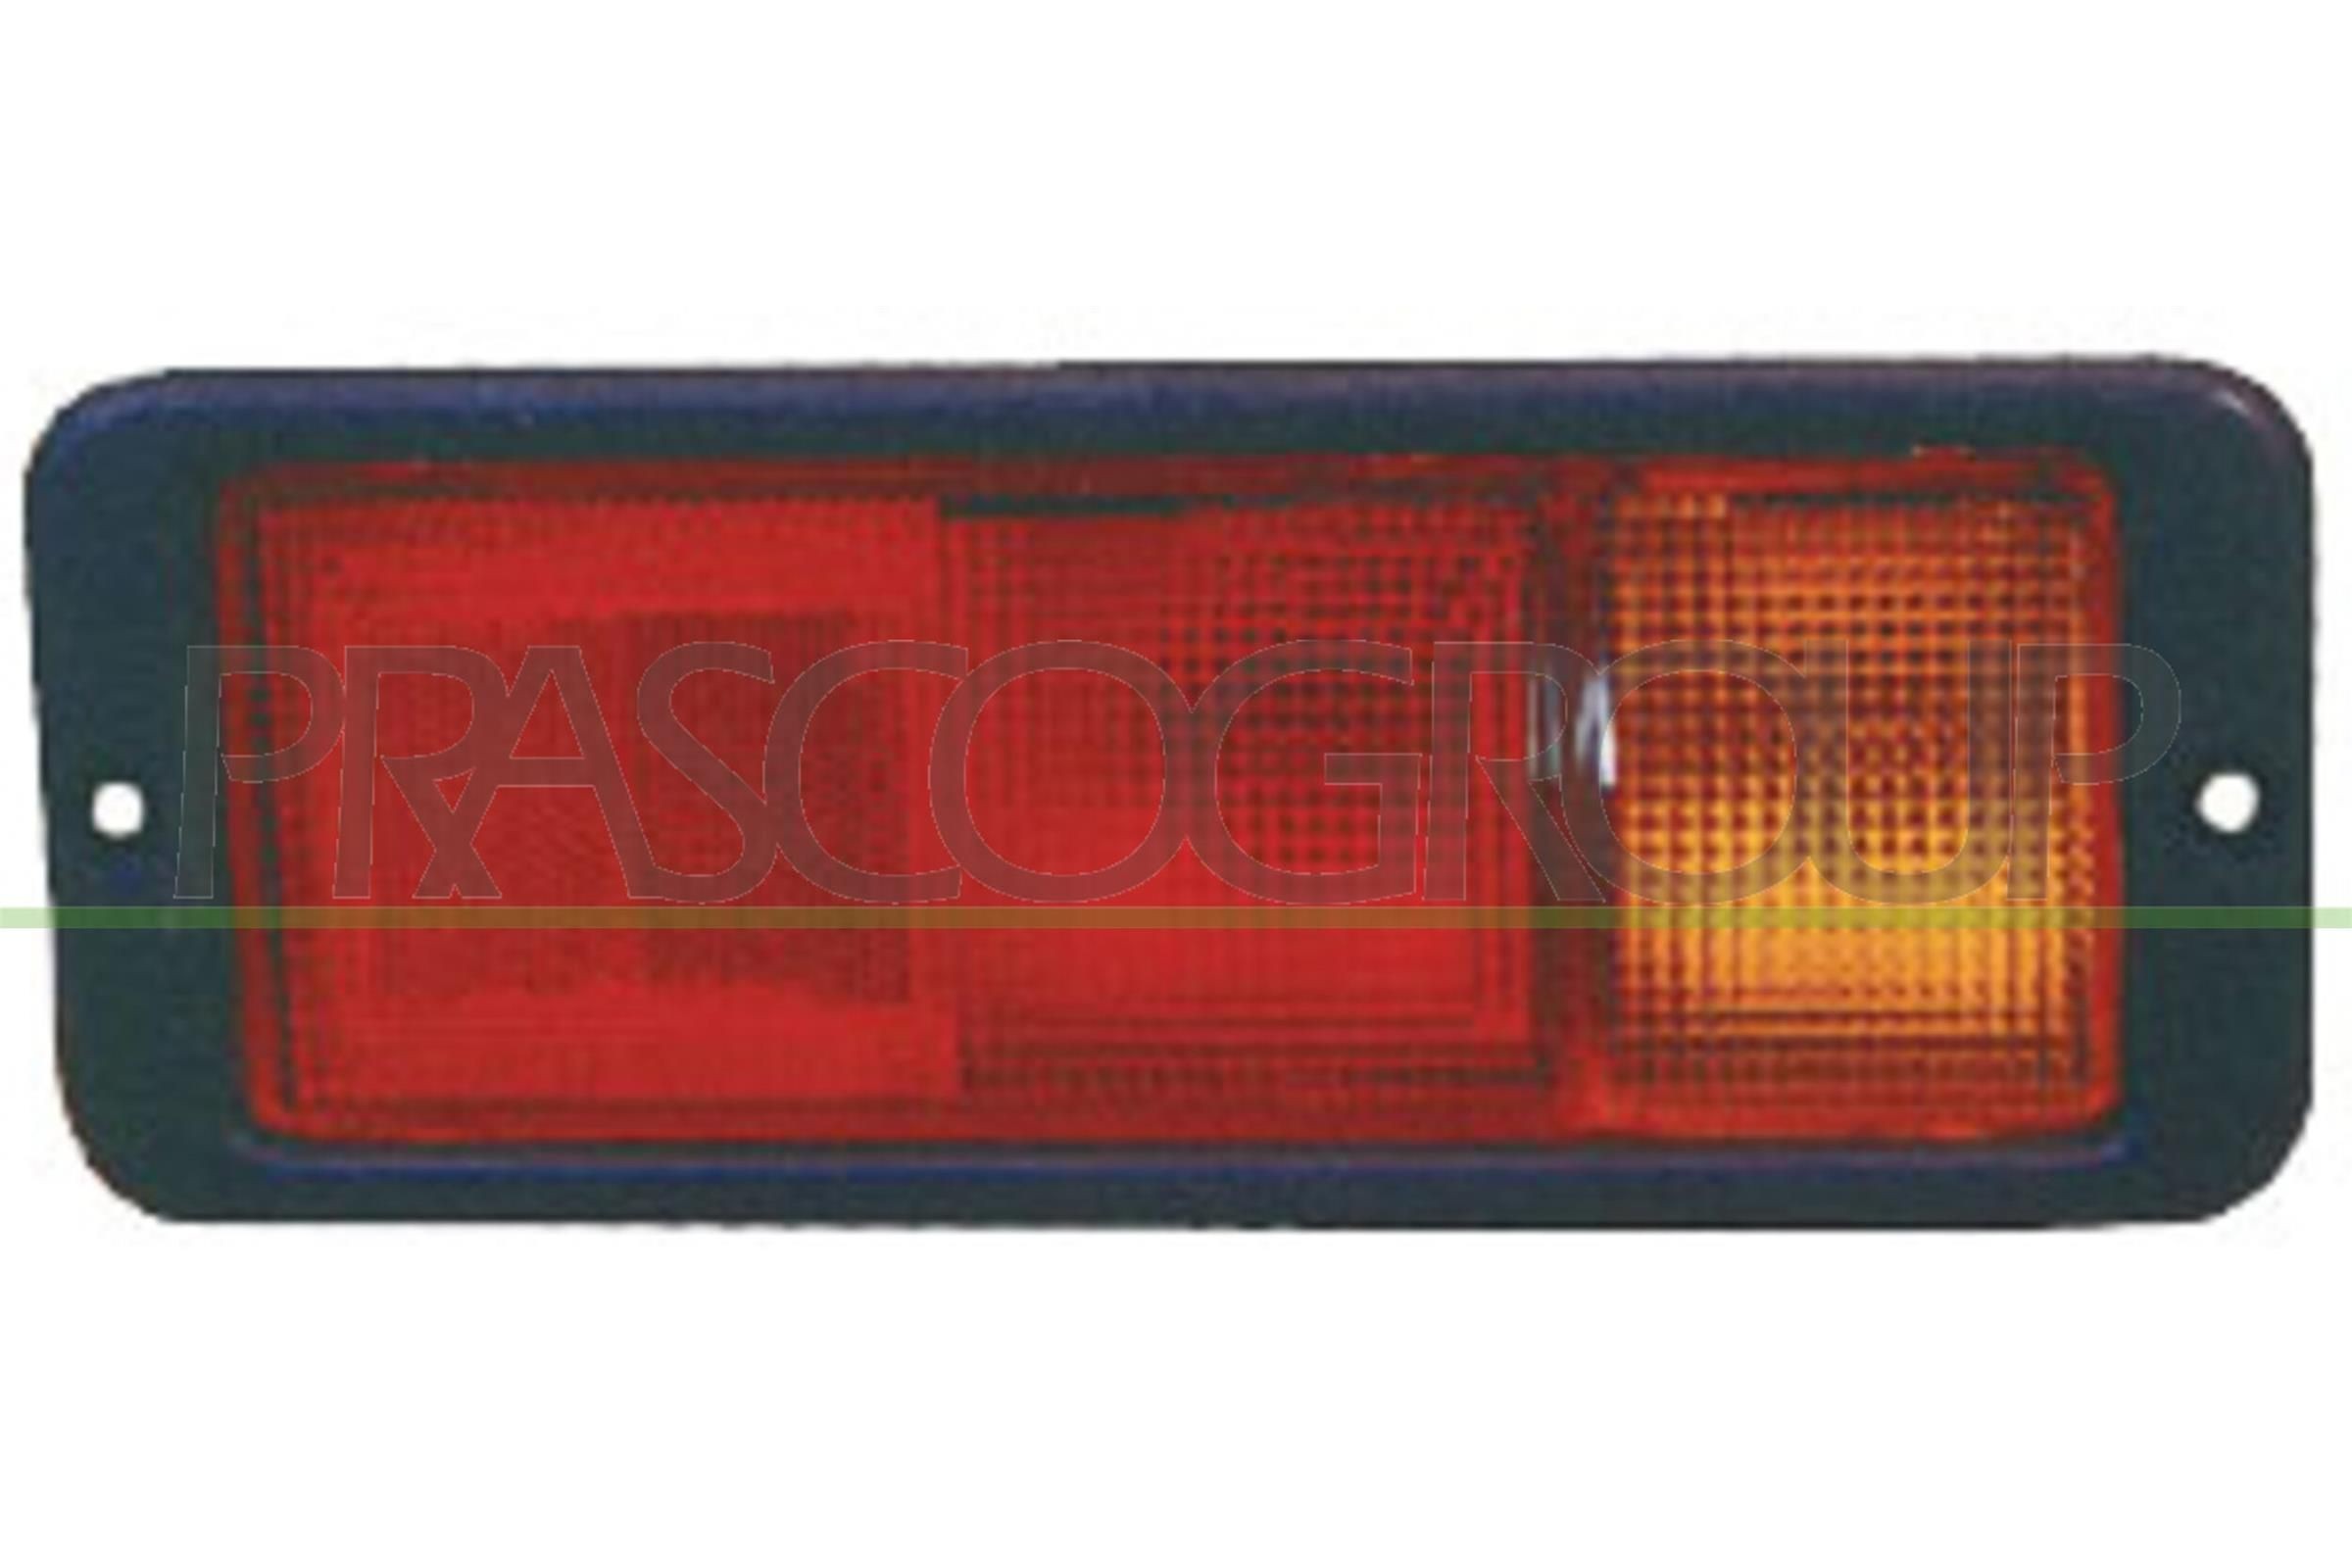 Mitsubishi PAJERO / SHOGUN Rear light PRASCO MB1554353 cheap